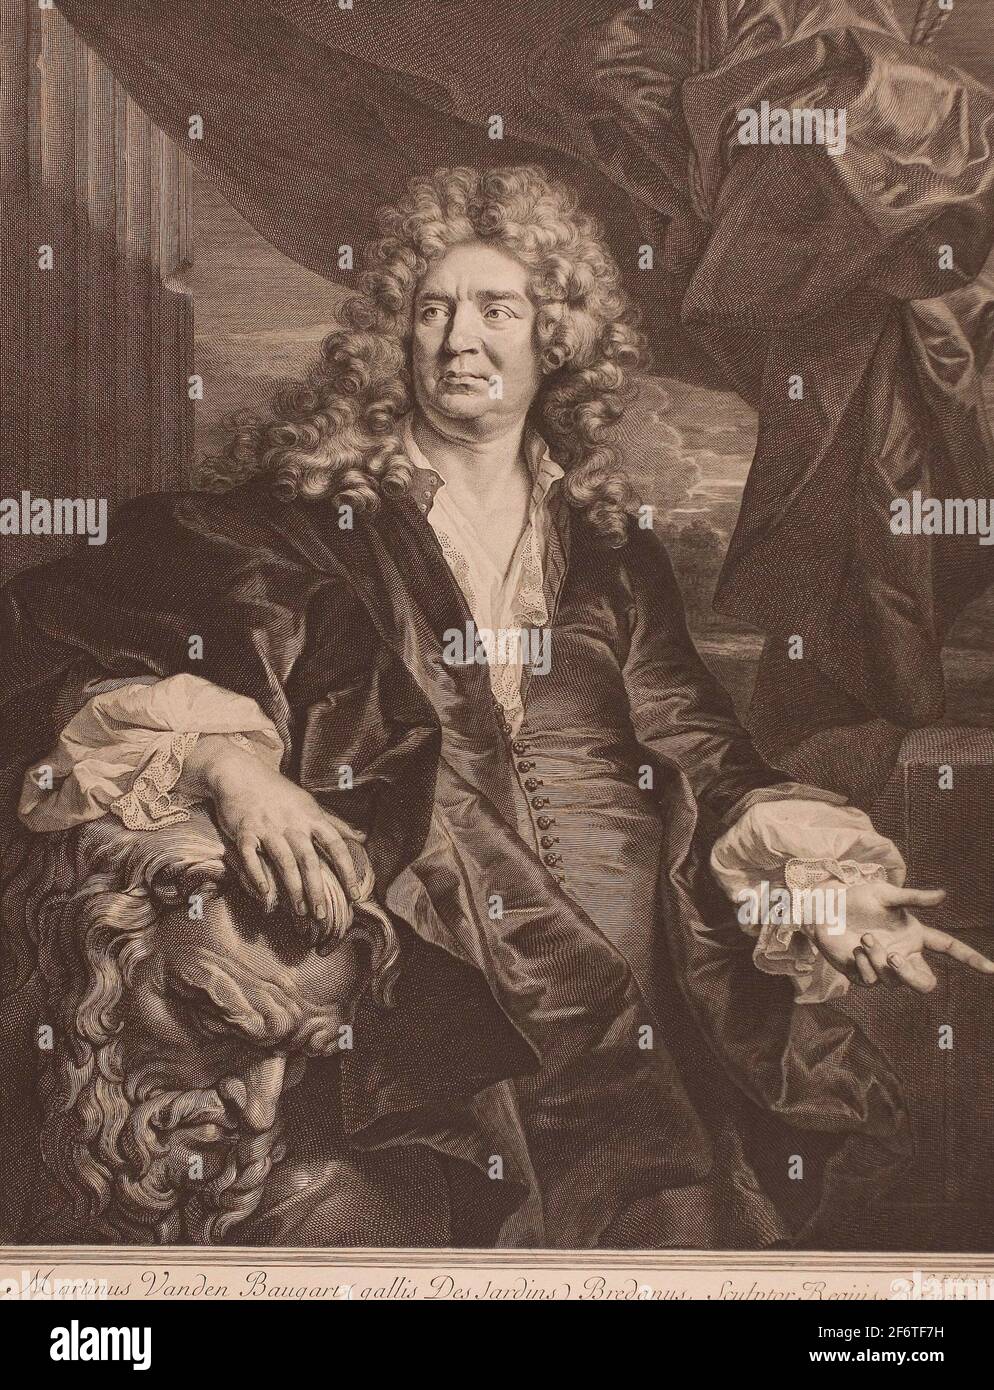 Author: Grard Edelinck. Martin Vanden Bogaert Desjardins - 1698 - Grard Edelinck (French, born Flanders, 1640-1707) after Hyacinthe Rigaud (French, Stock Photo